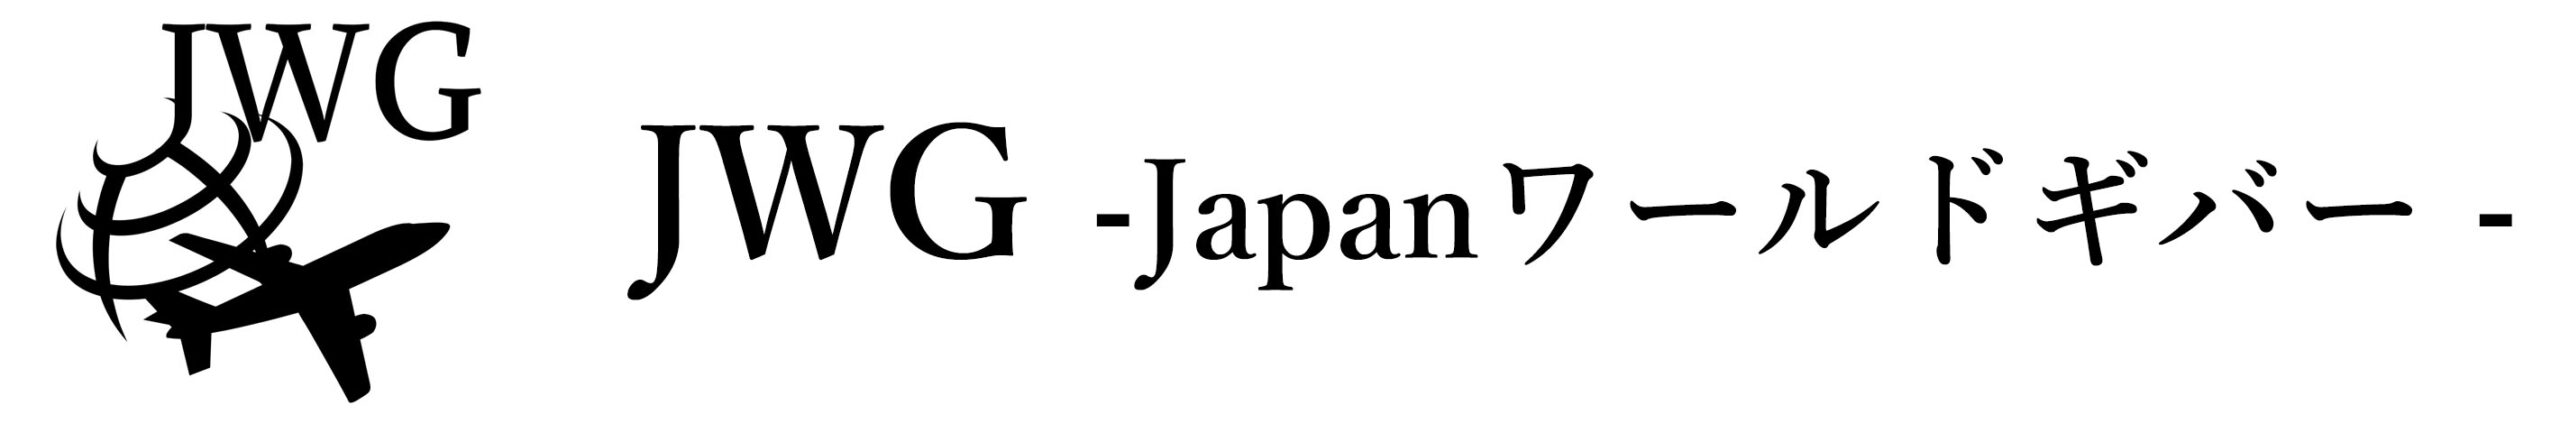 JWG -Japanワールドギバー -